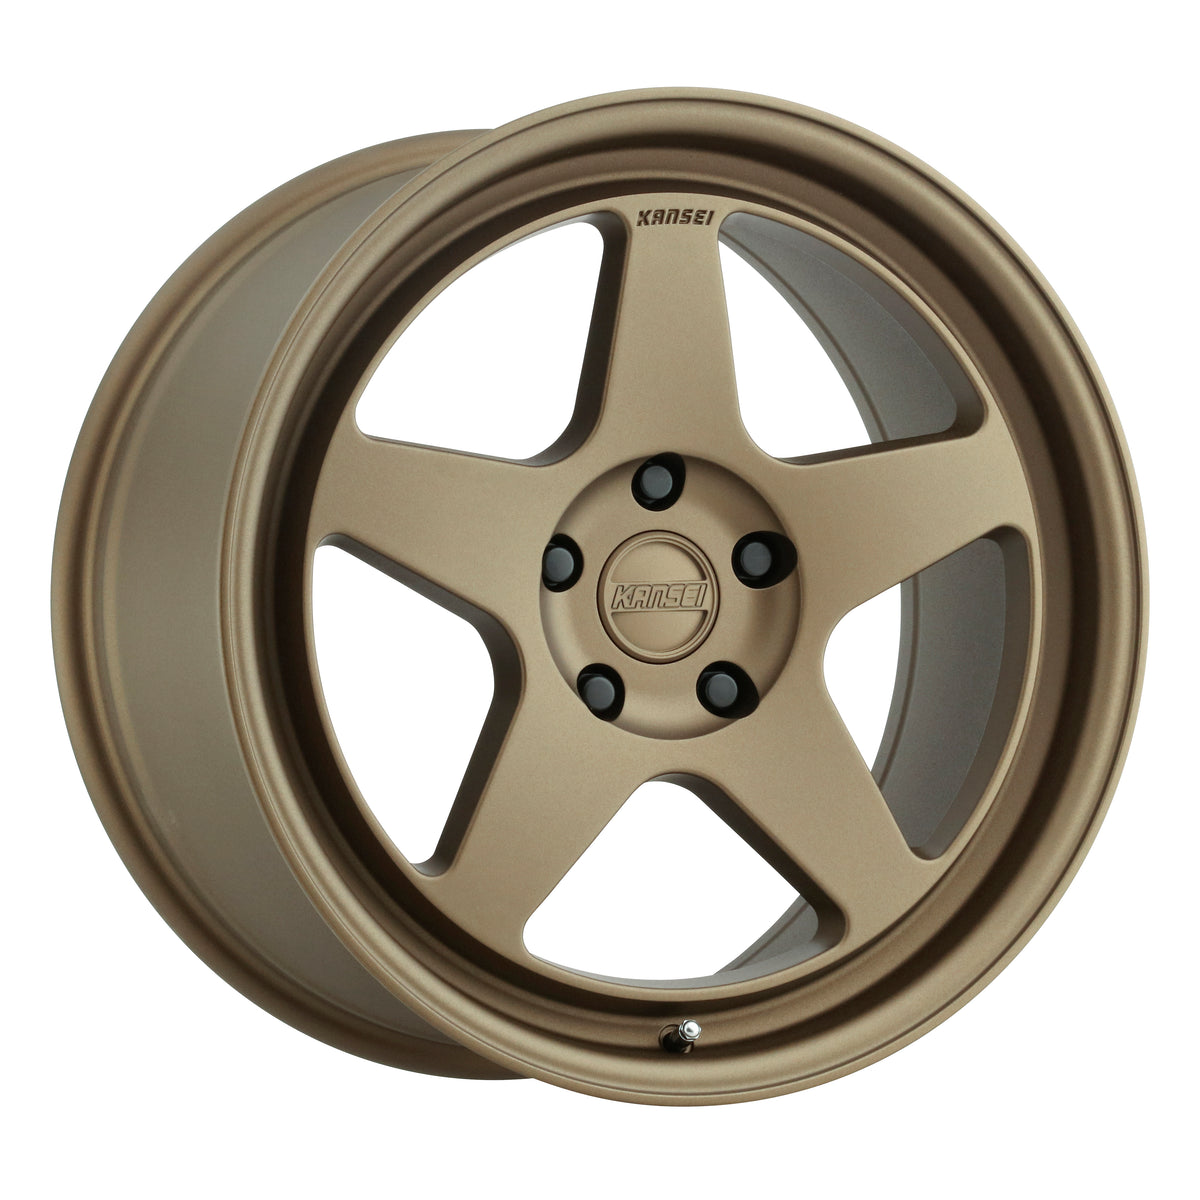 K12B KNP Wheel, Size: 18" x 8.50", Bolt Pattern: 5 x 112 mm, Backspace: 6.13" [Finish: Bronze]